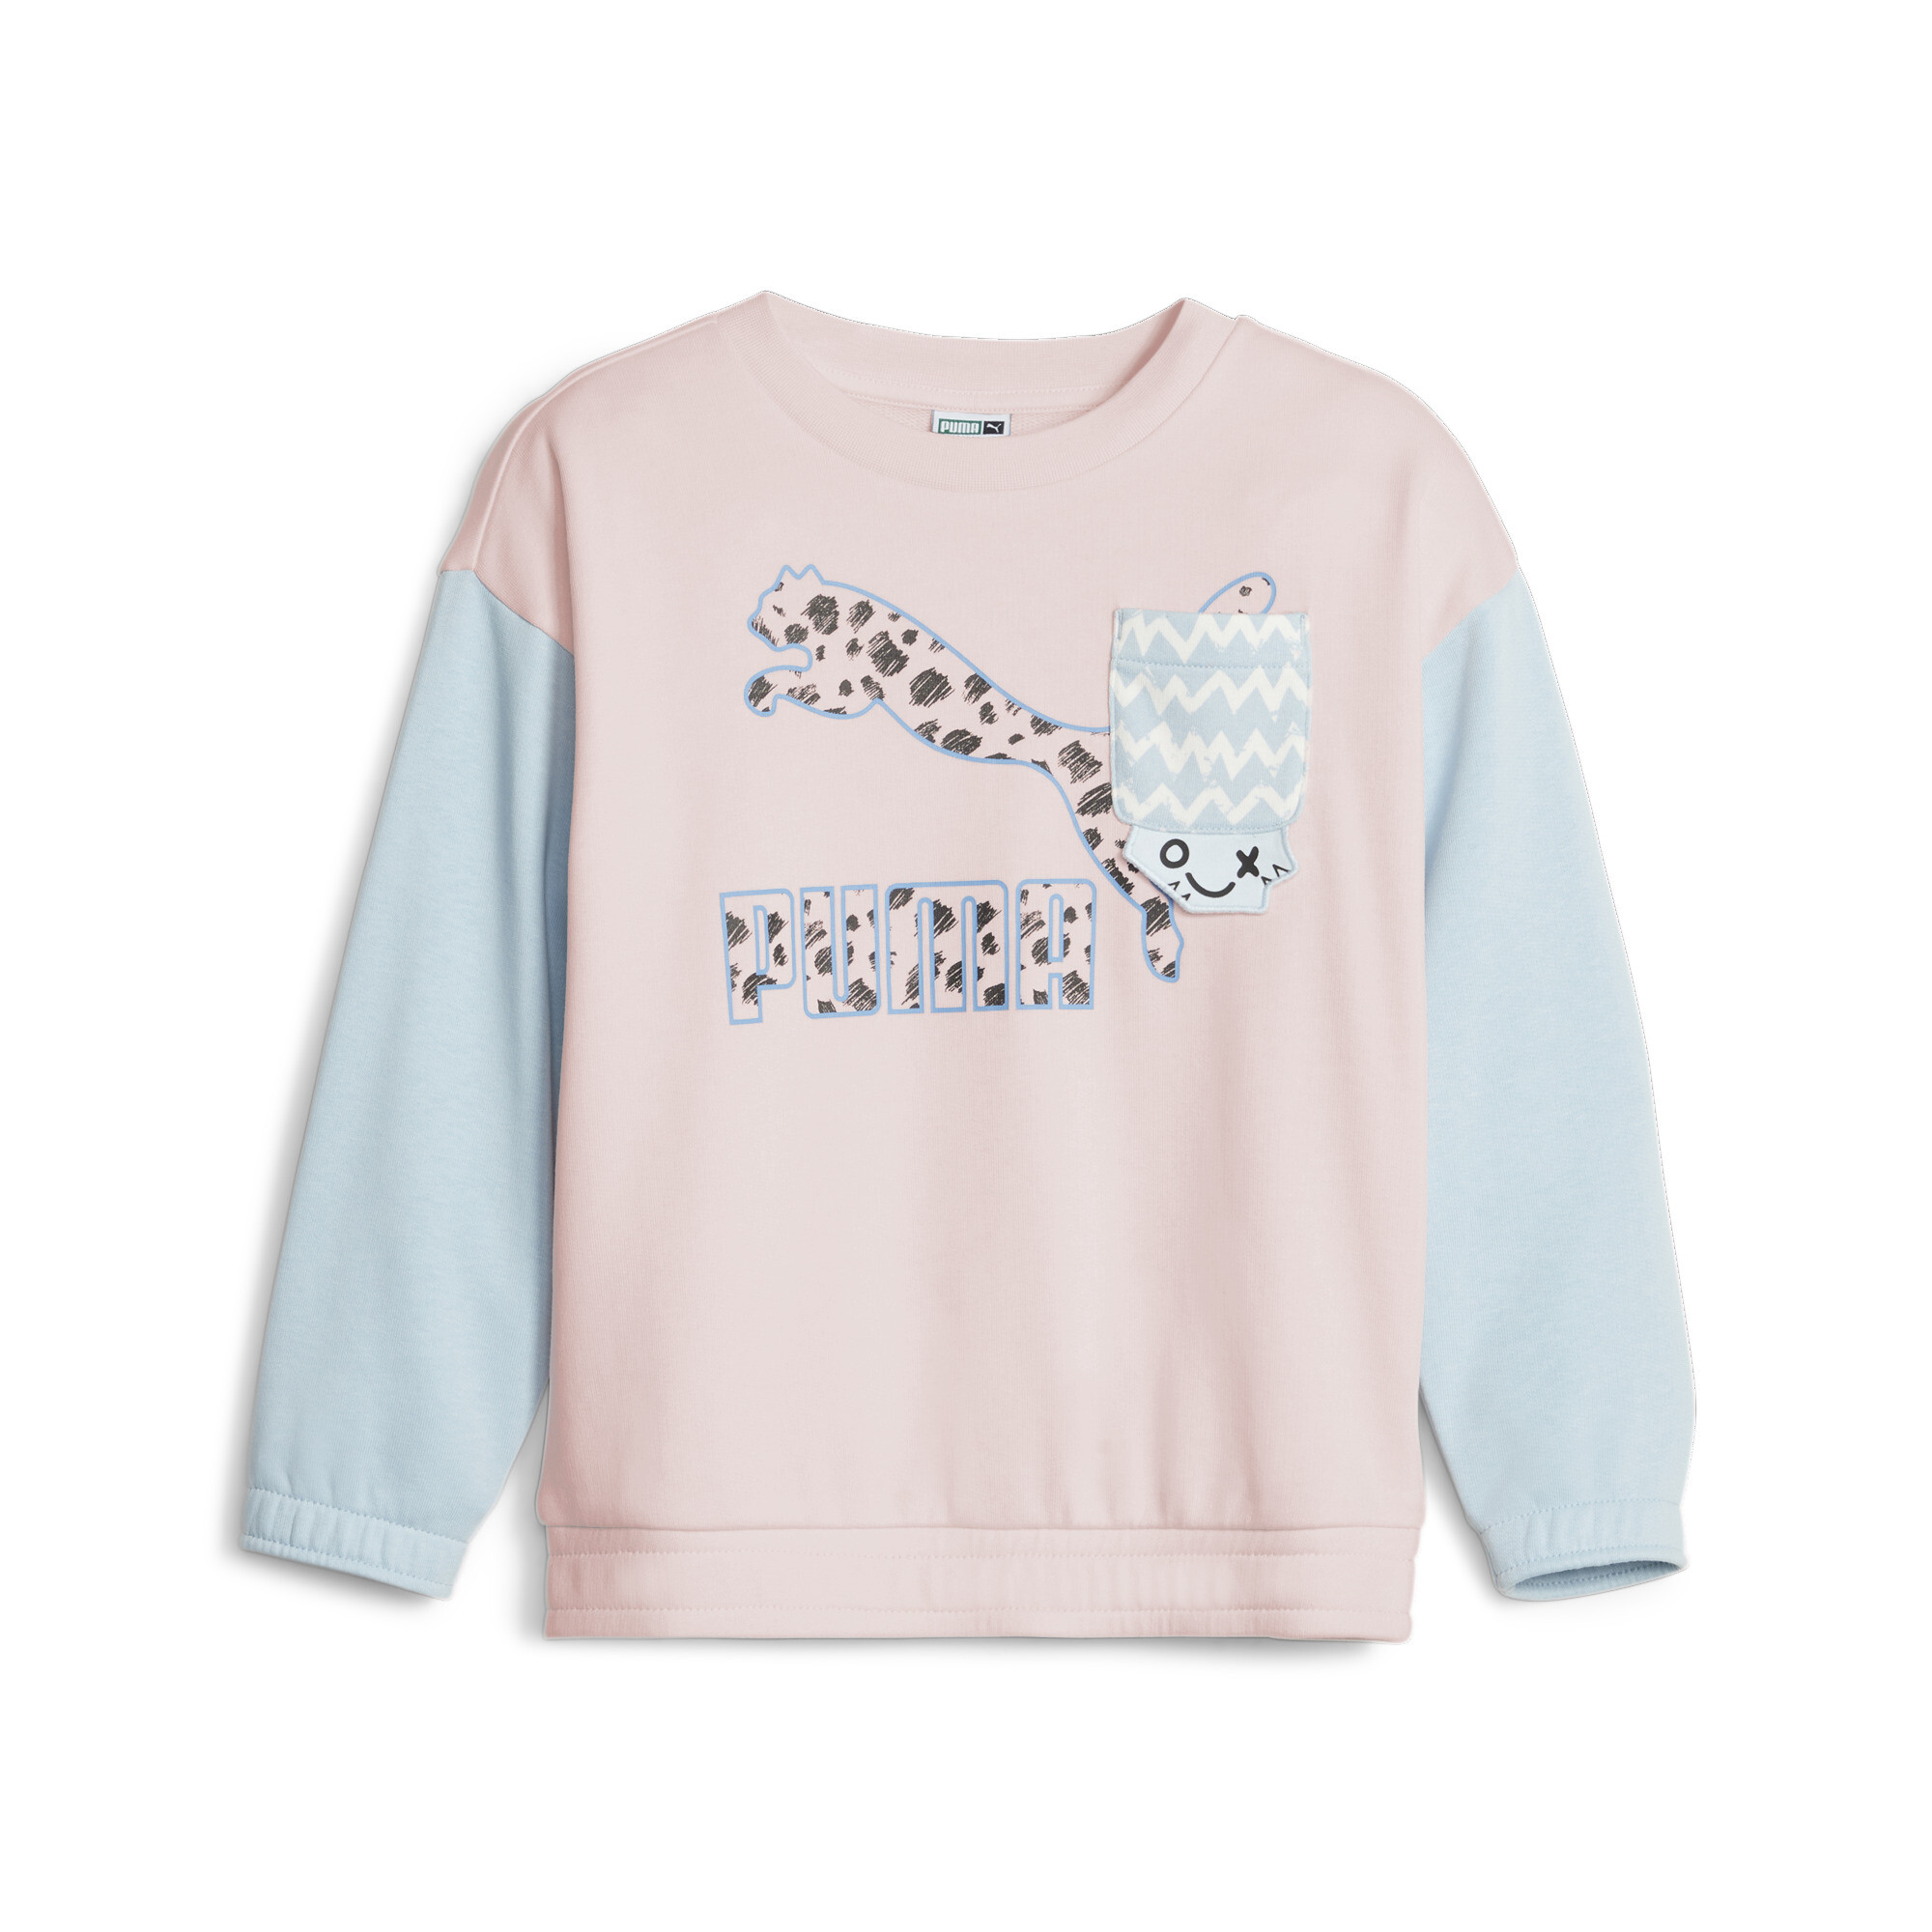 PUMA Classics Mix Match Sweatshirt In Pink, Size 5-6 Youth